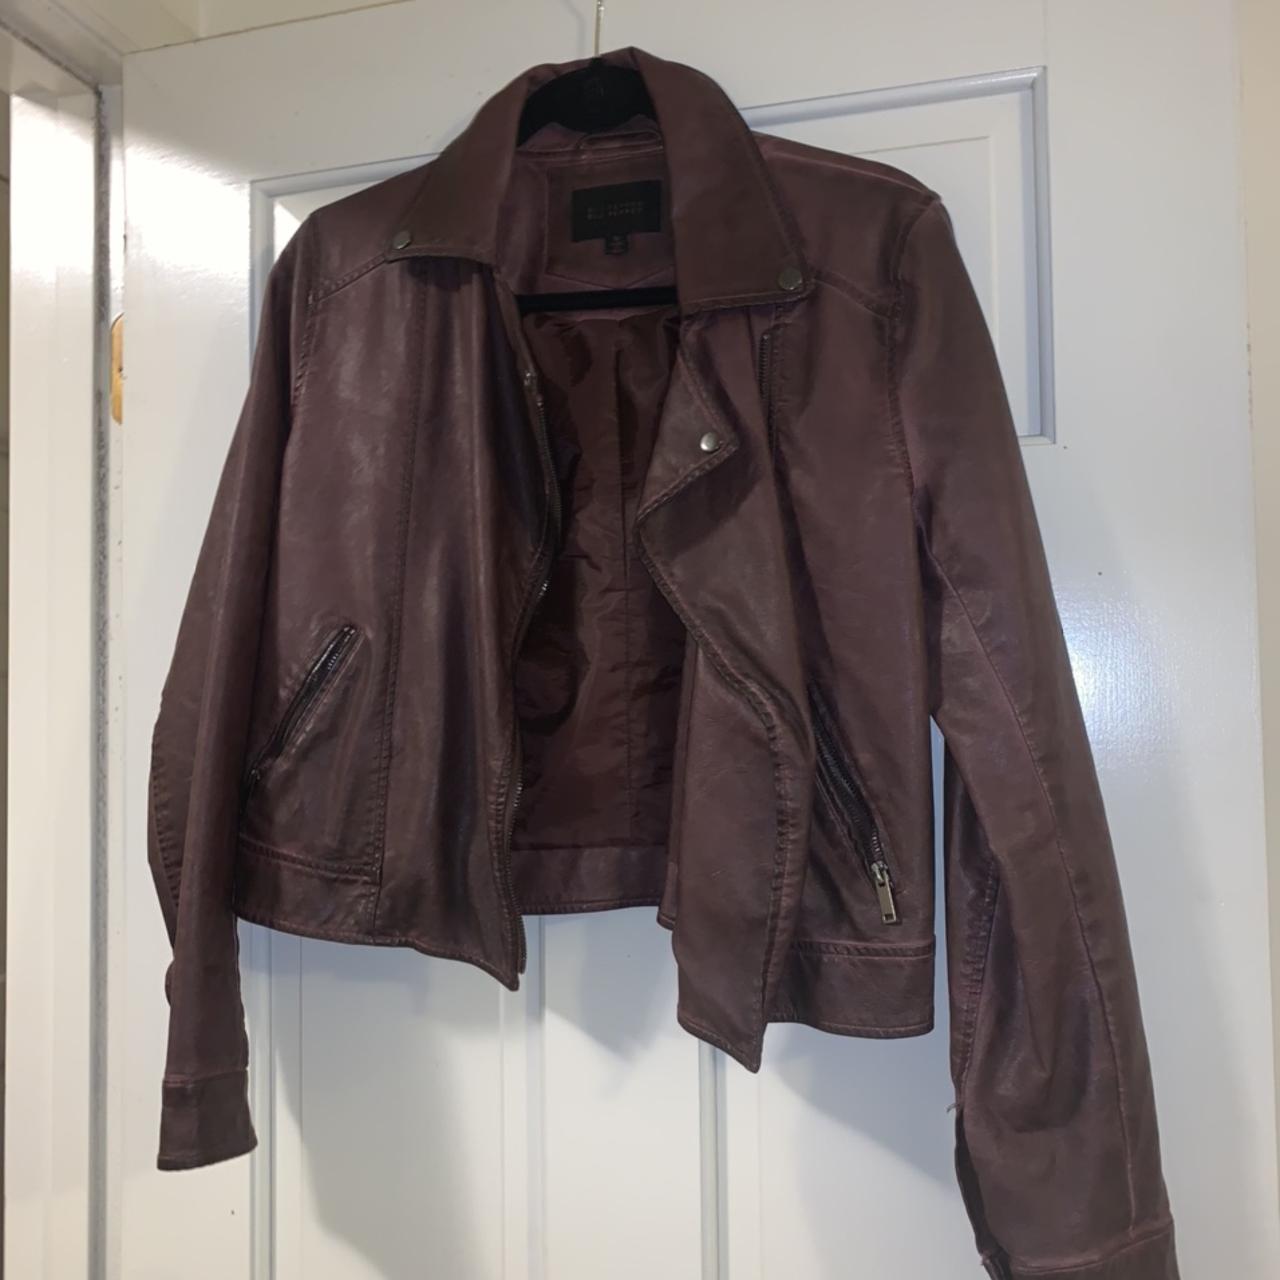 Cute burgundy leather jacket! - Depop